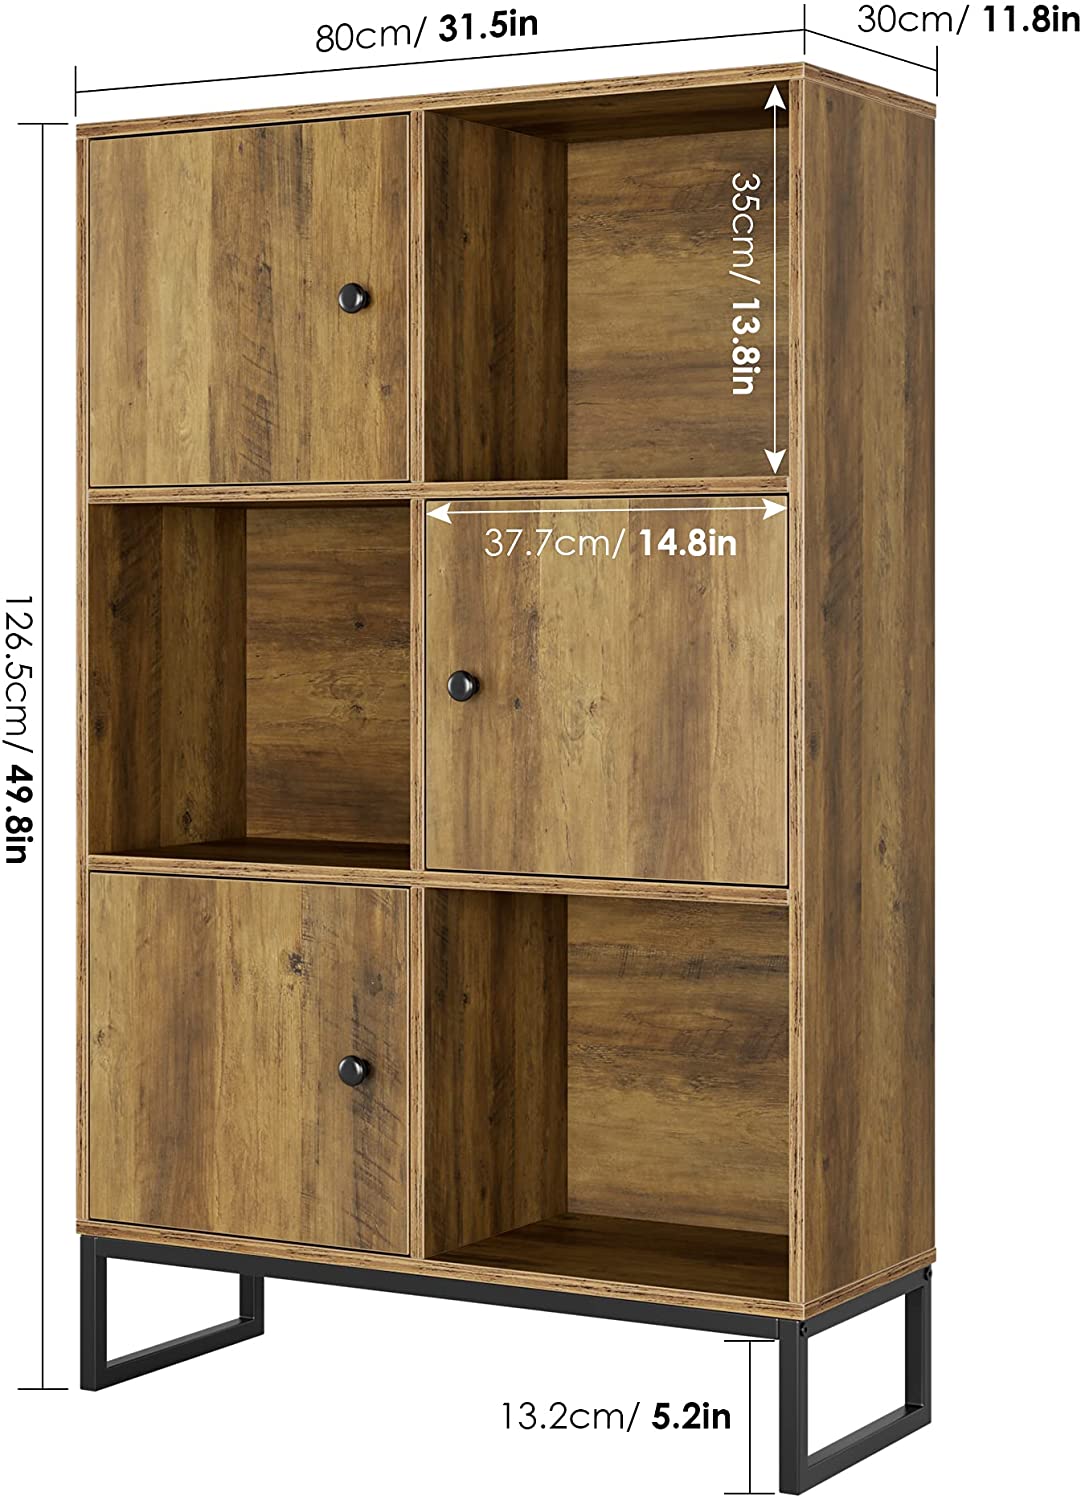 Grandiose Wooden Bookcase with 6 Compartments